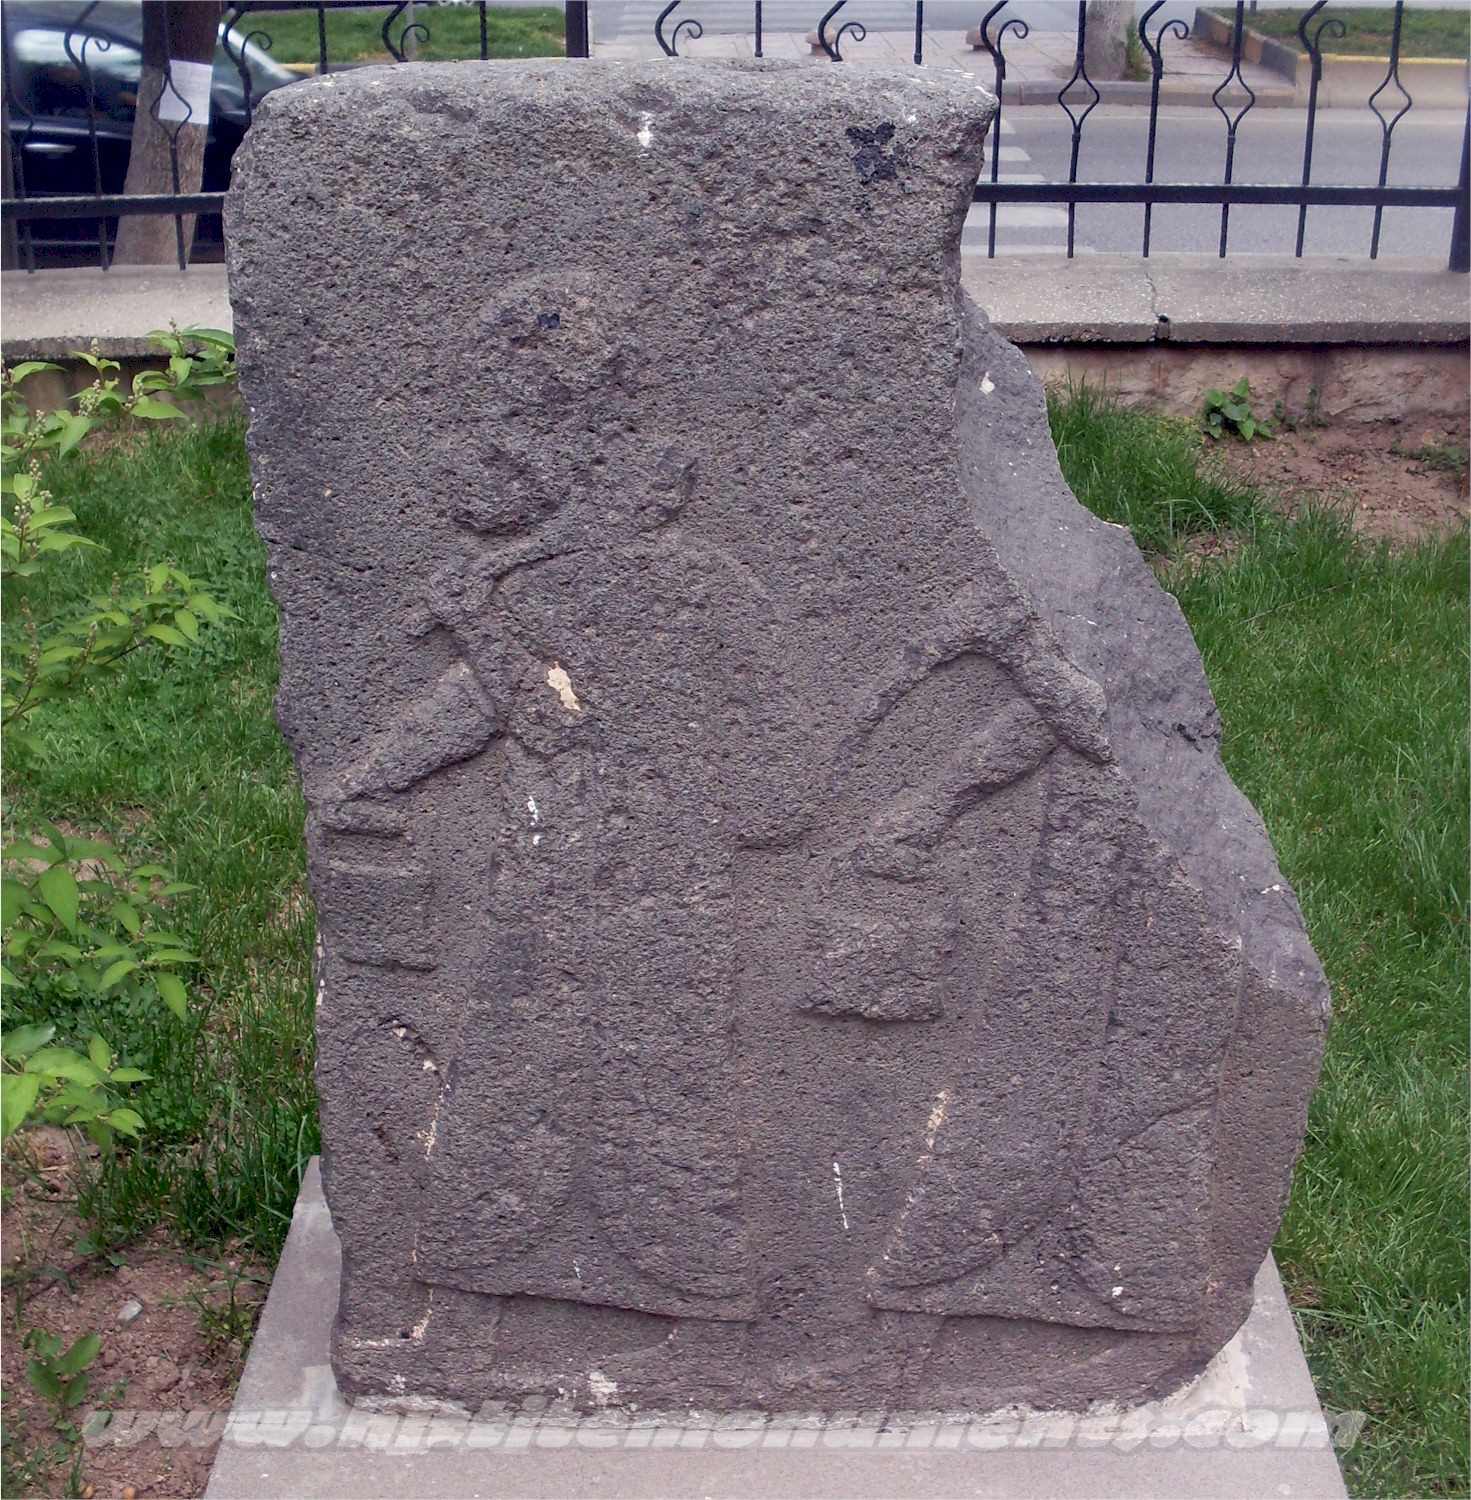 Photo of the Merdanlı stele taken by B. Bilgin in 2009